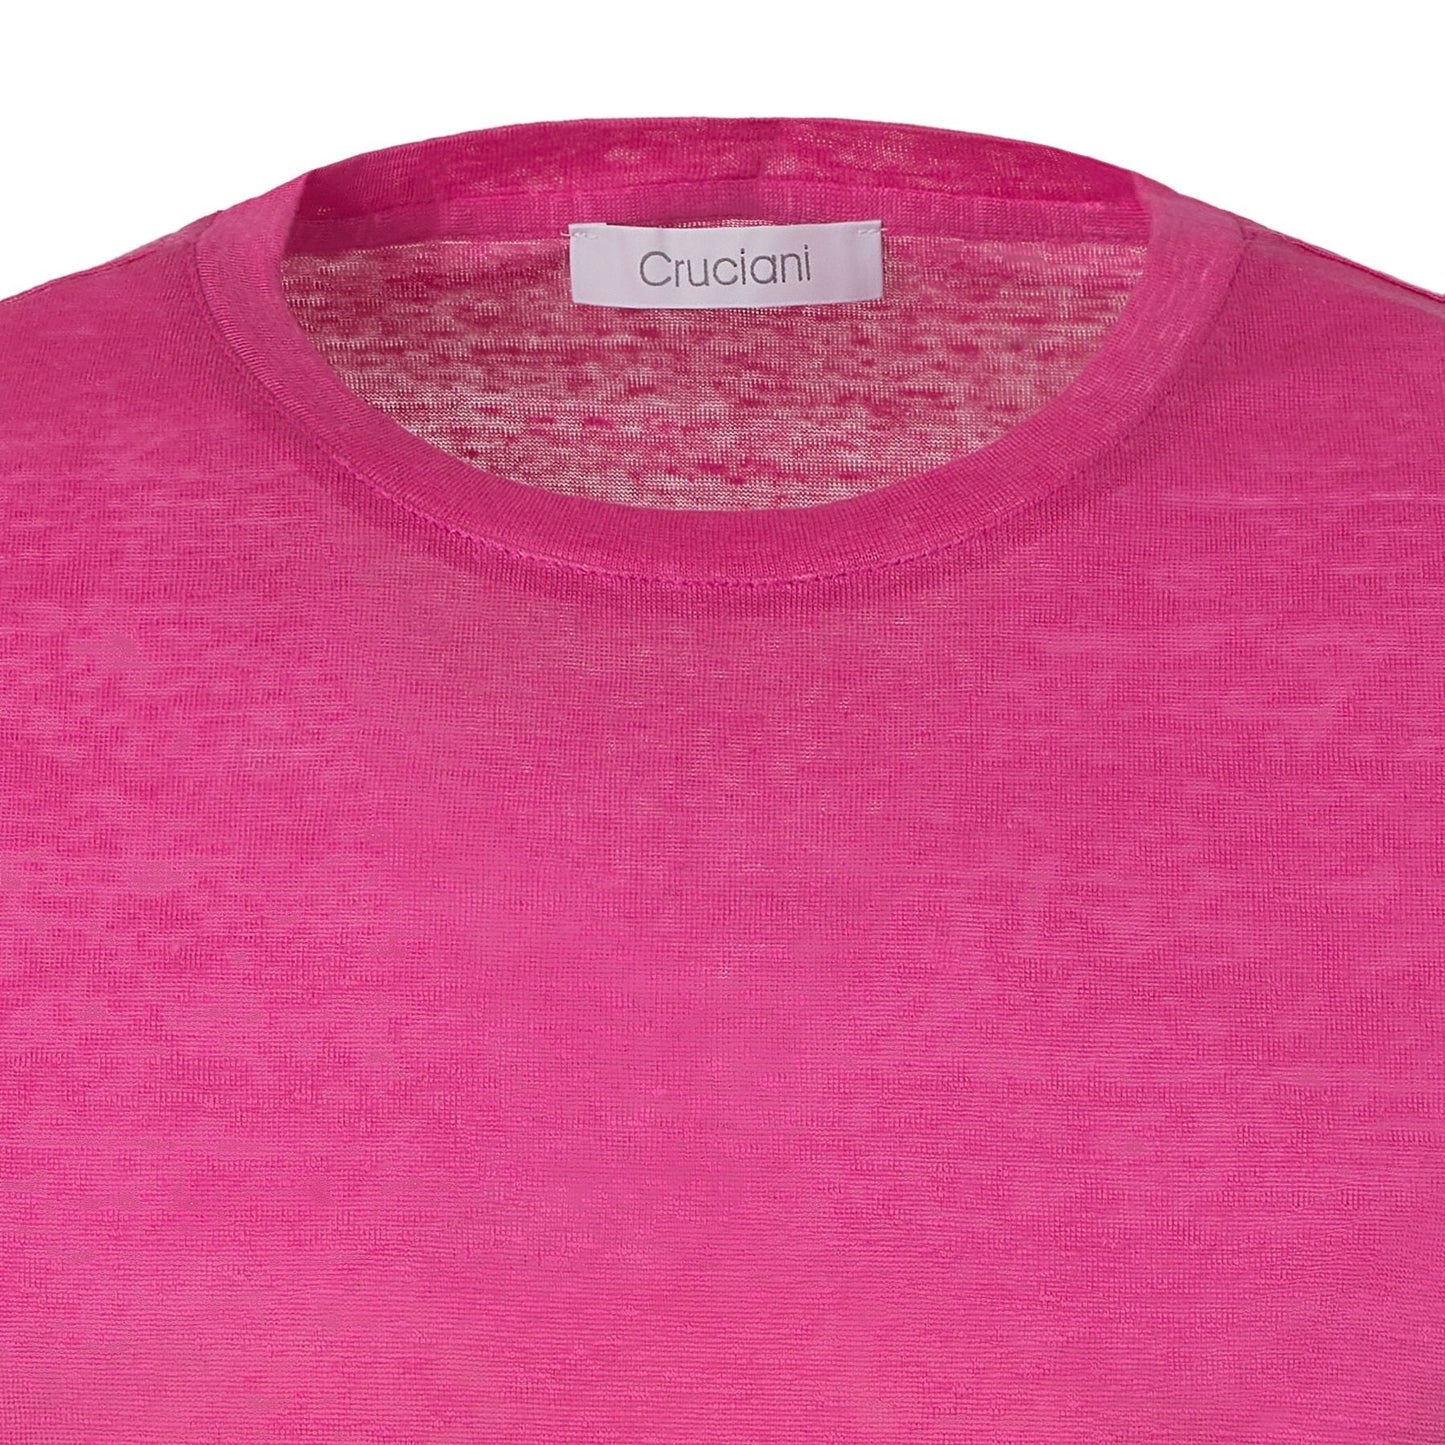 Cruciani Crew-Neck Linen T-Shirt in Neon Pink - SARTALE